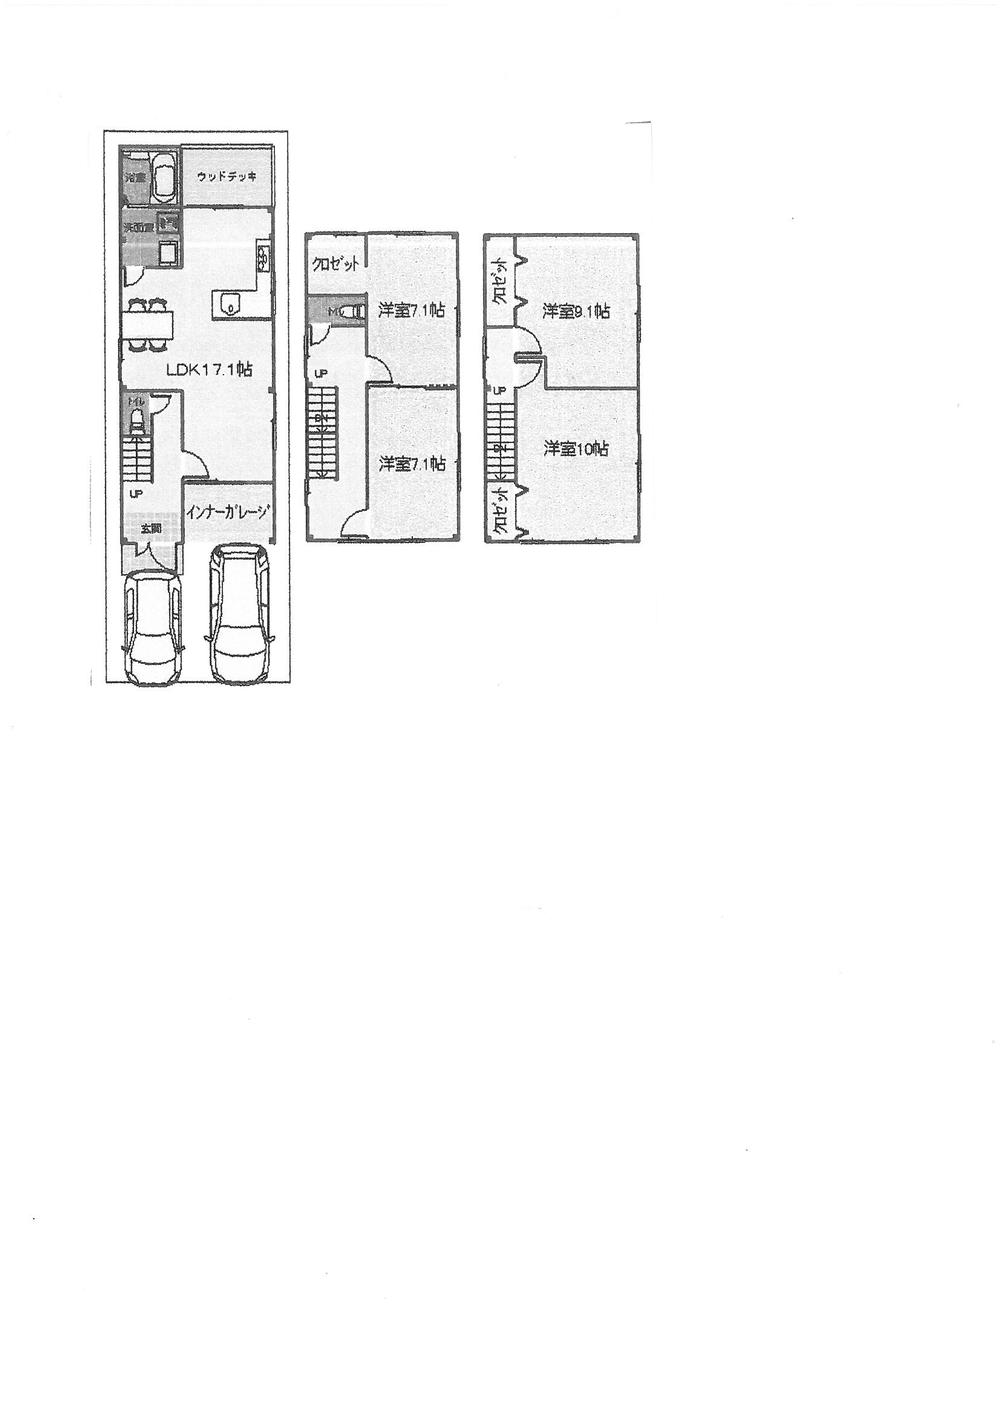 Floor plan. 28,330,000 yen, 4LDK, Land area 95.9 sq m , Building area 132.22 sq m